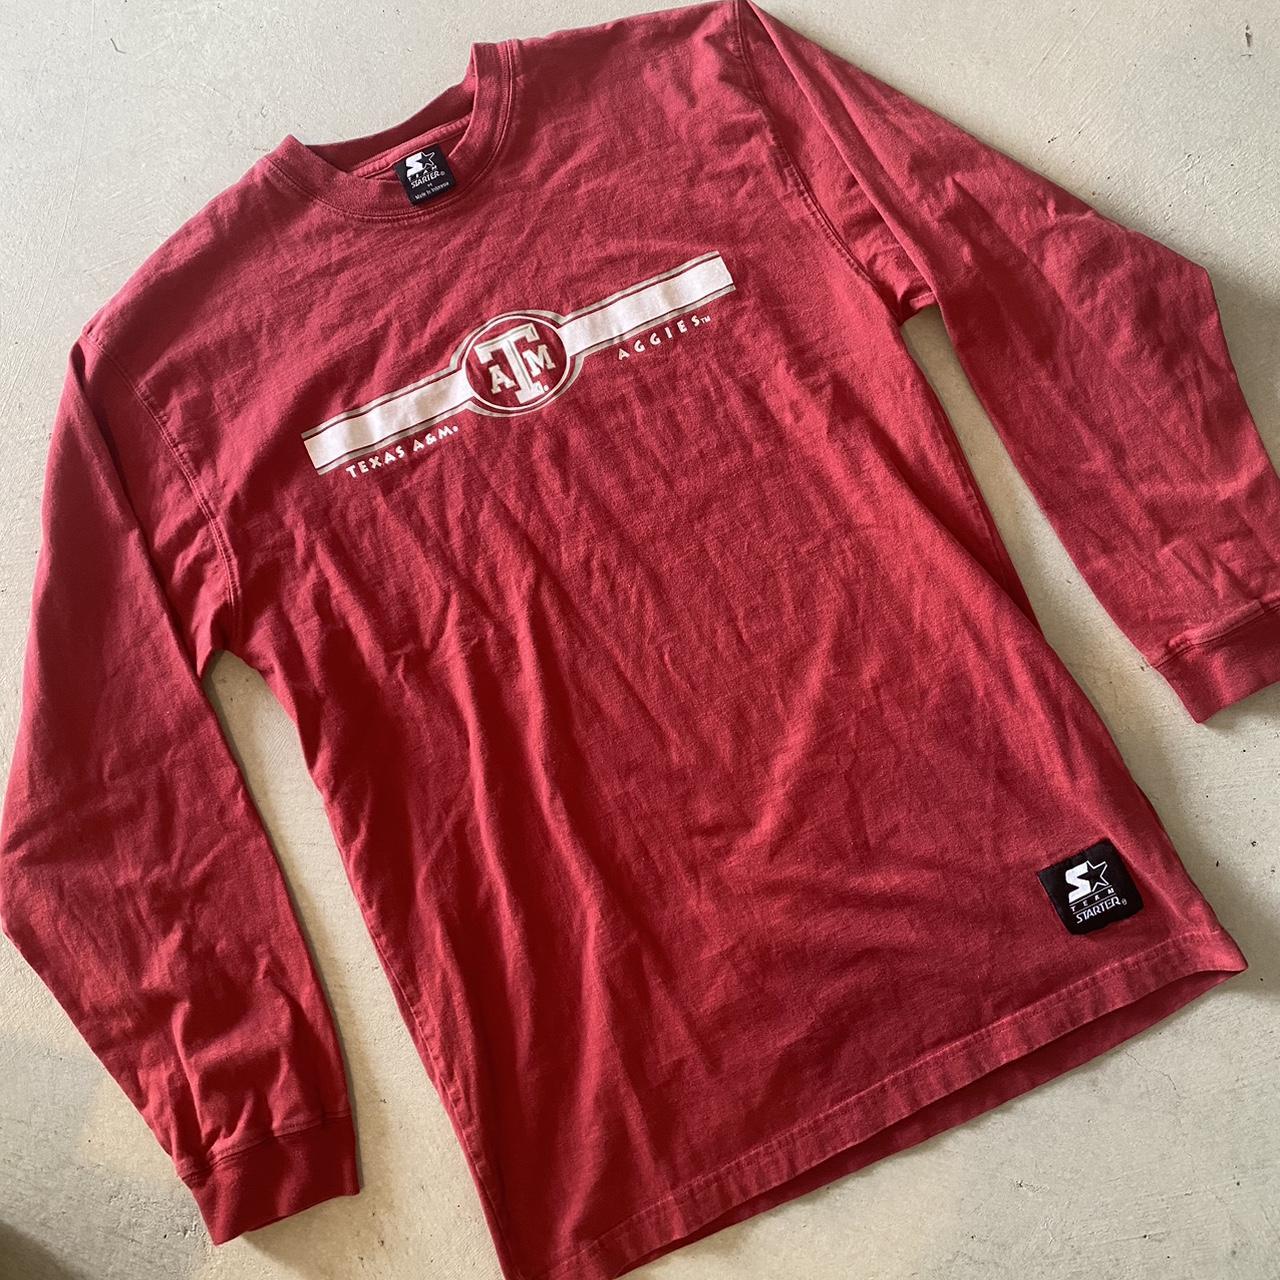 Starter Men's T-Shirt - Red - M